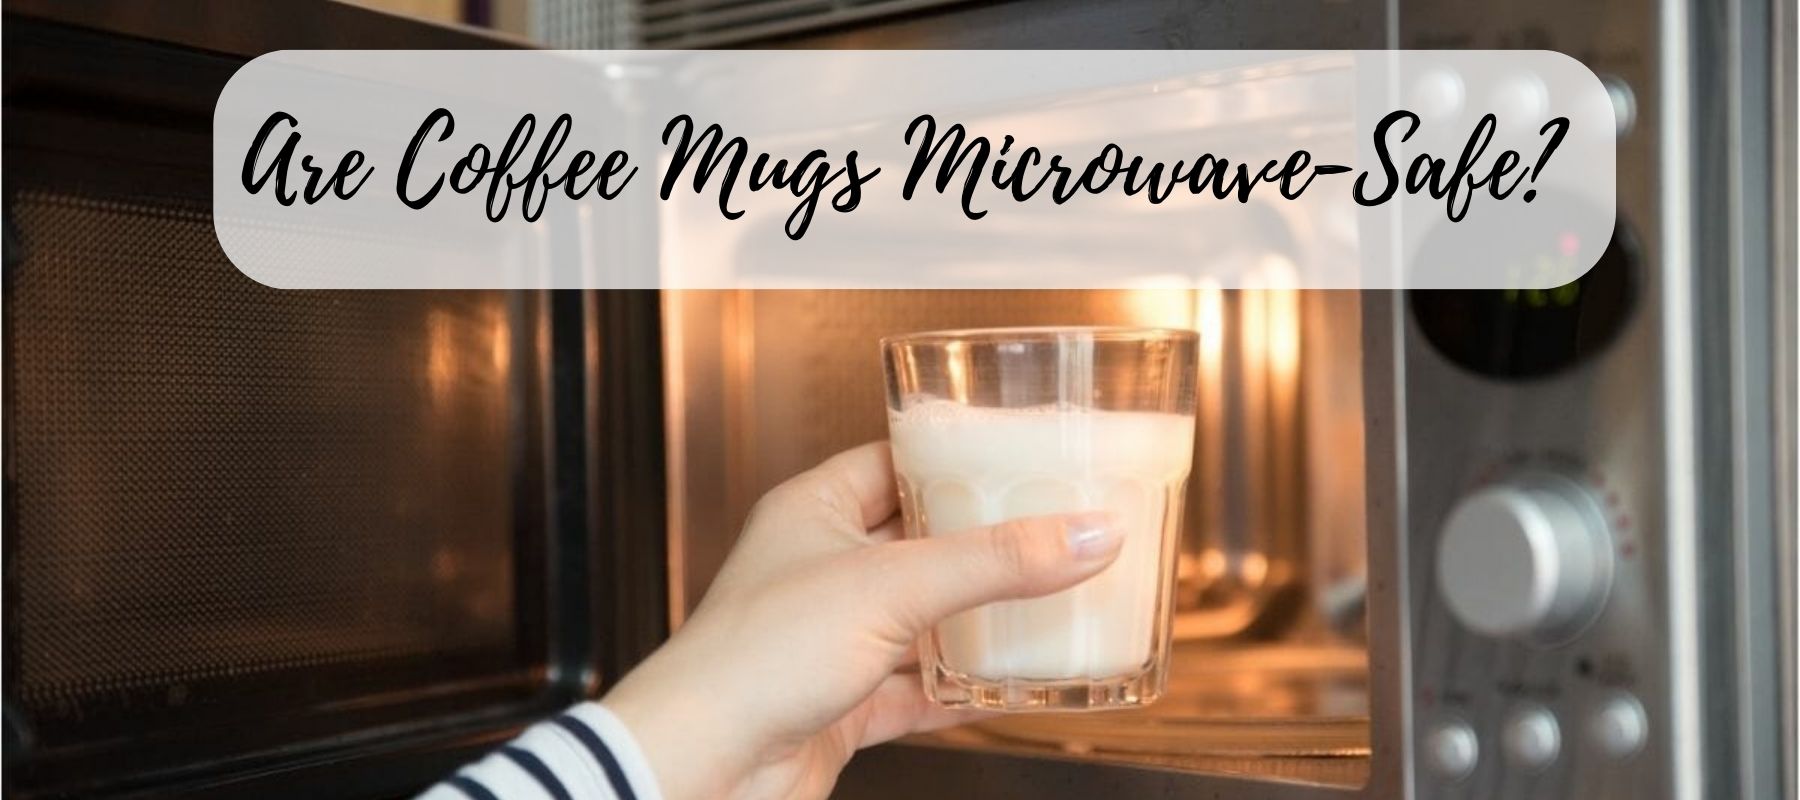 Are-Coffee-Mugs-Microwave-Safe?